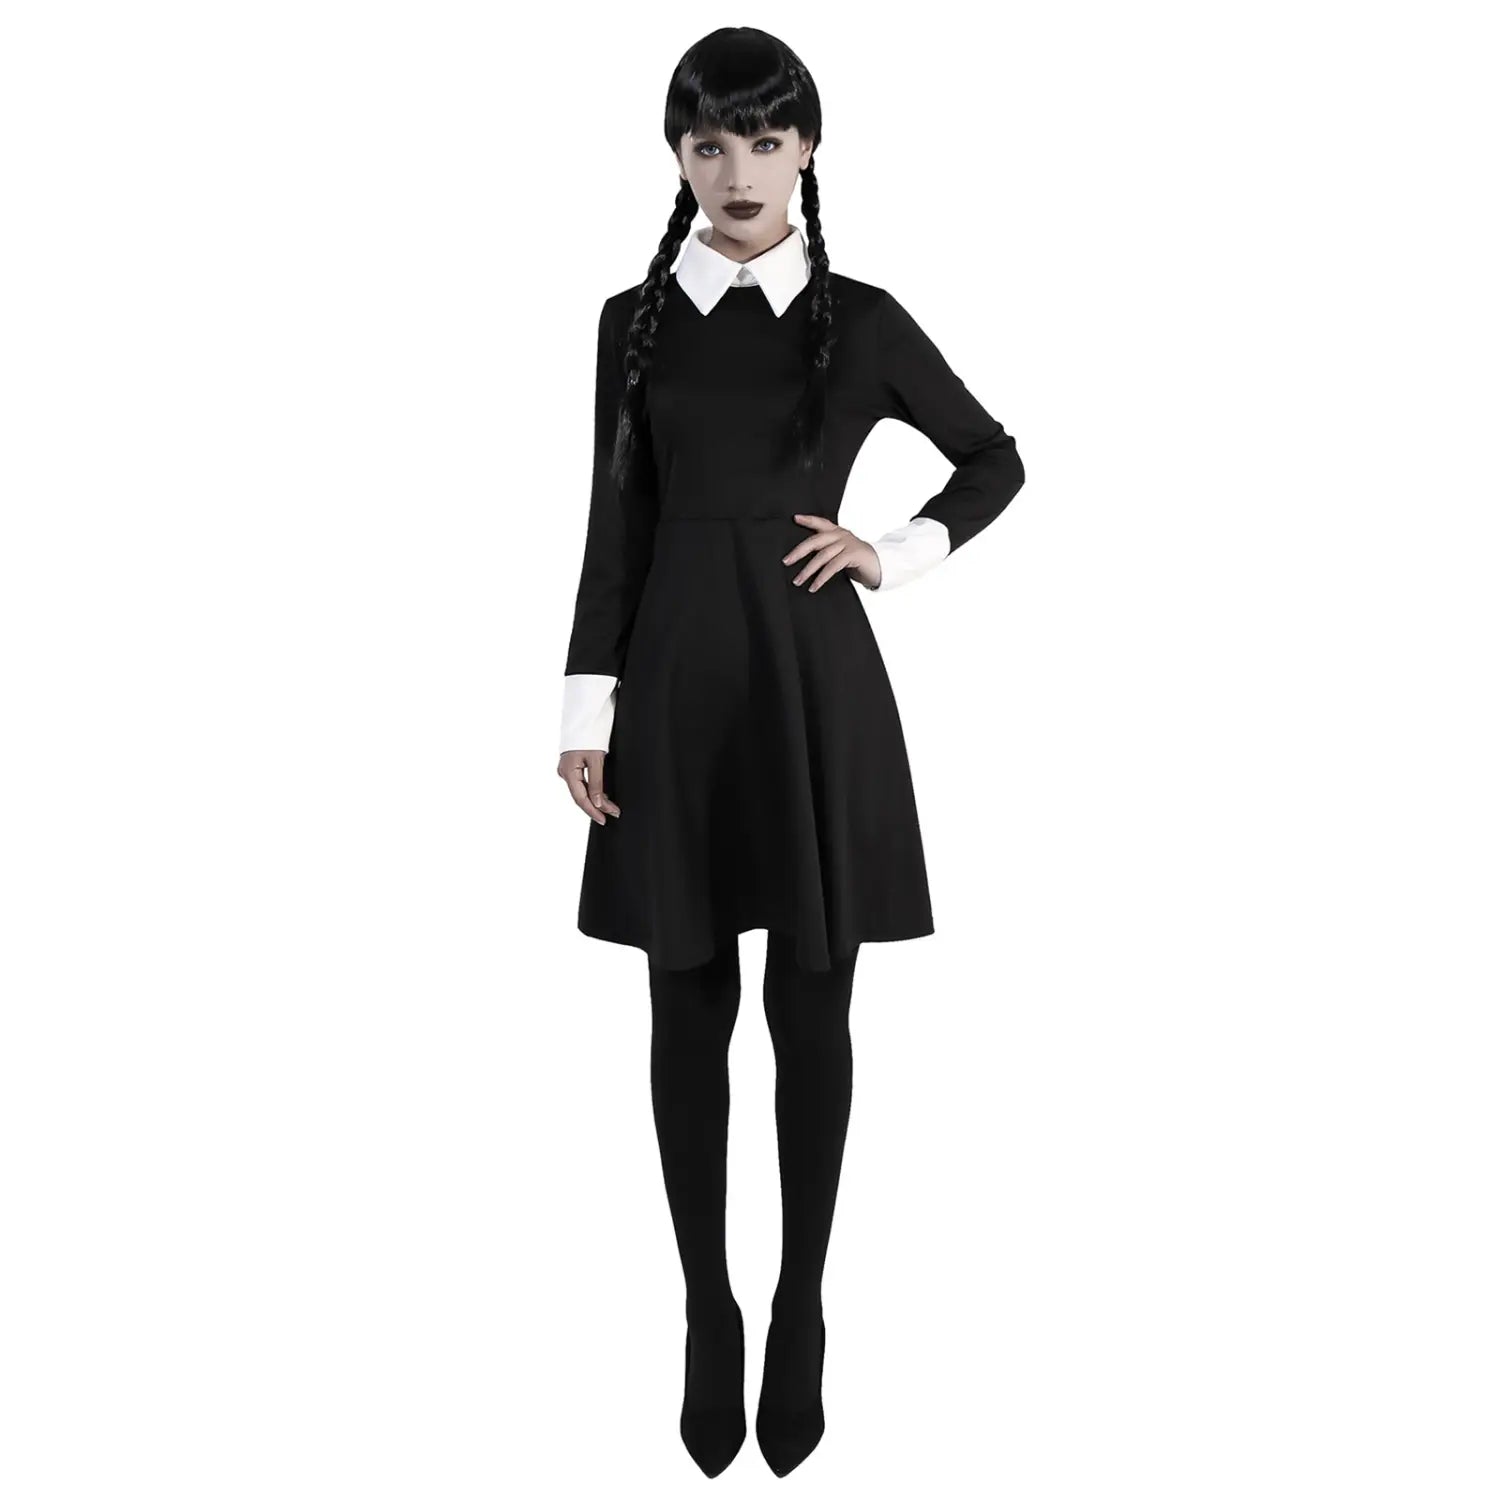 Lovemi - Women’s Dark Retro Dress Halloween